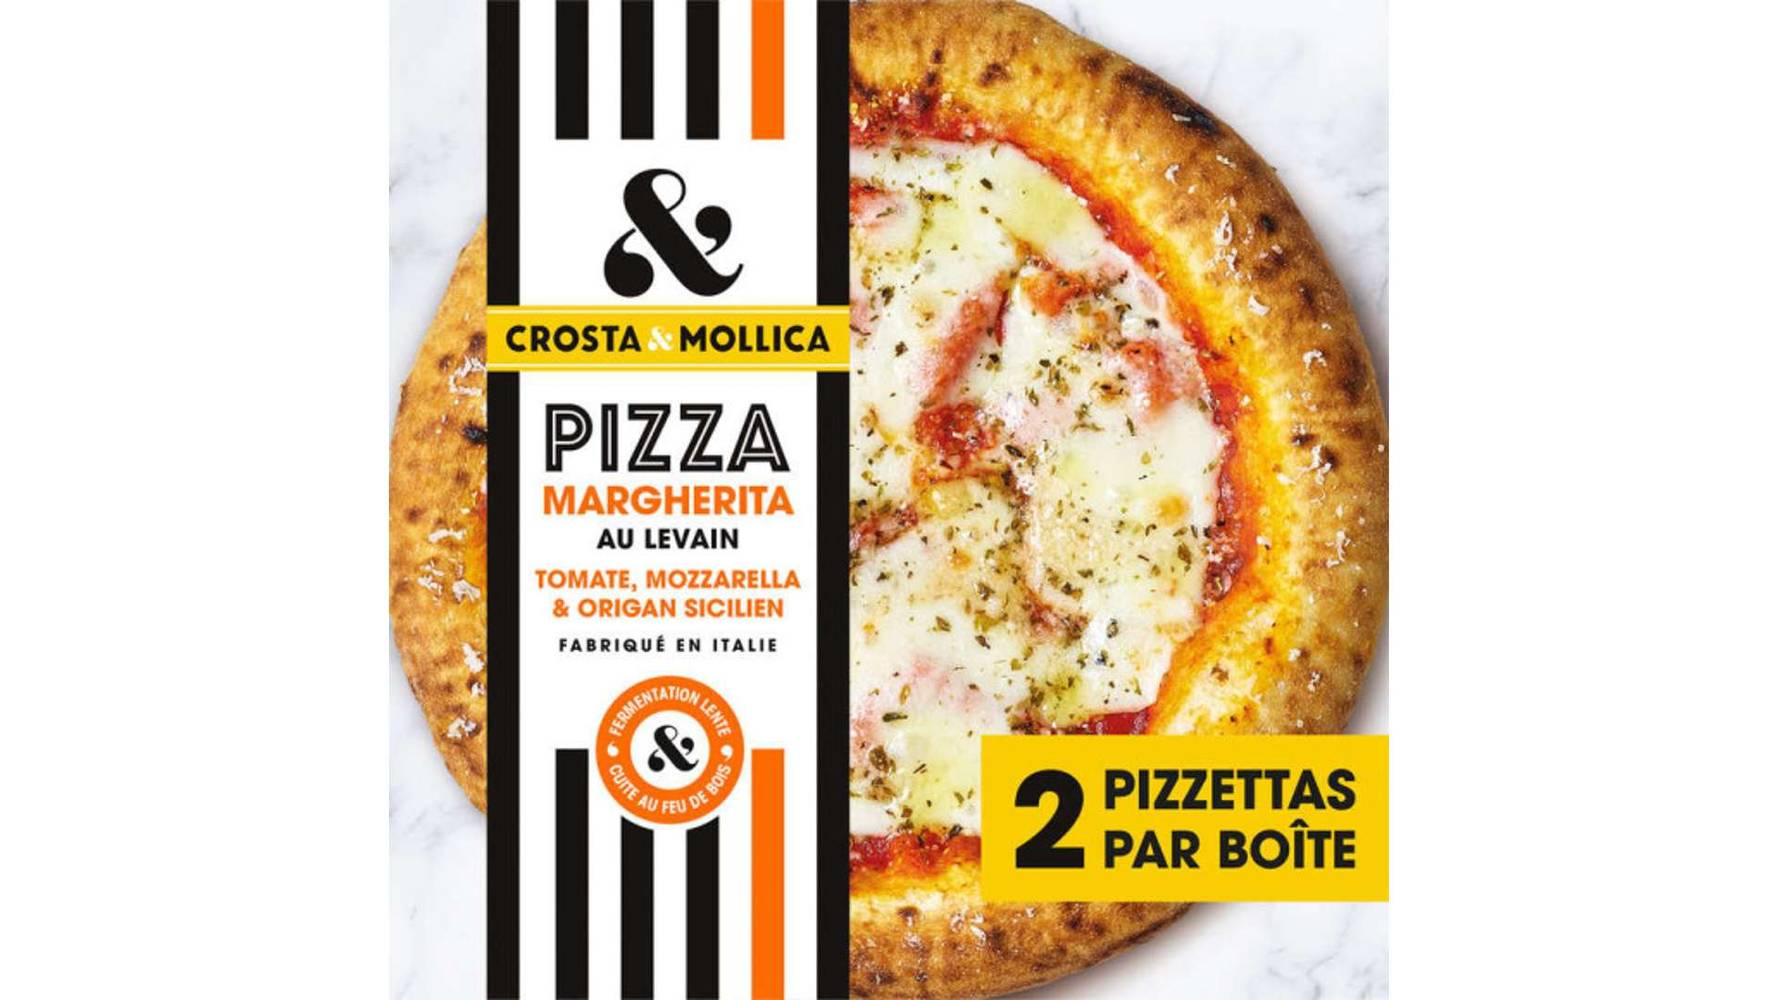 Crosta & Mollica Pizzettas Margherita au levain, tomate mozzarella et origan sicilien, surgelees, fabriquees en Italie La boite de 2, 436g